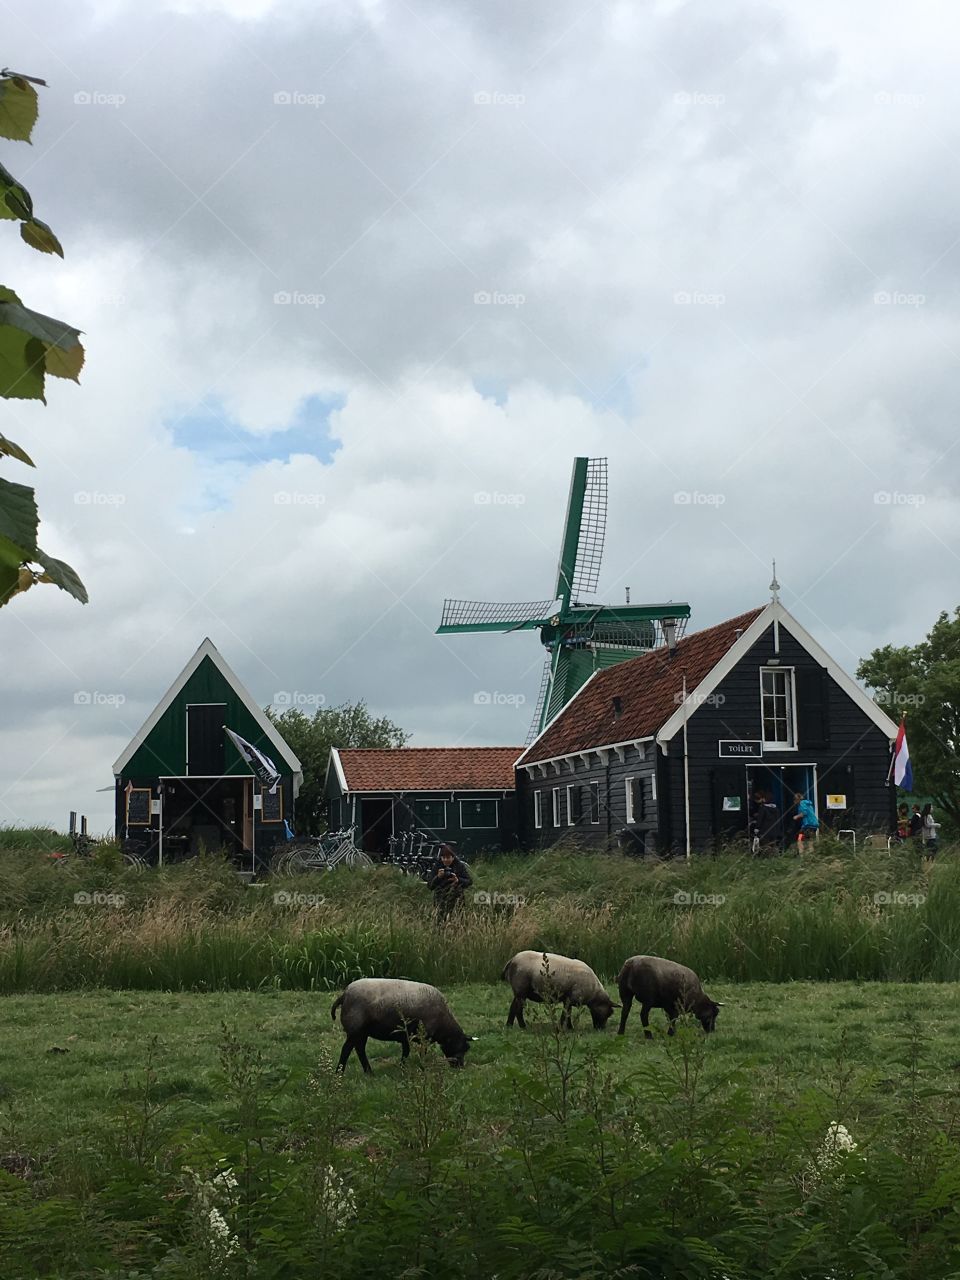 Windmills in Holland 